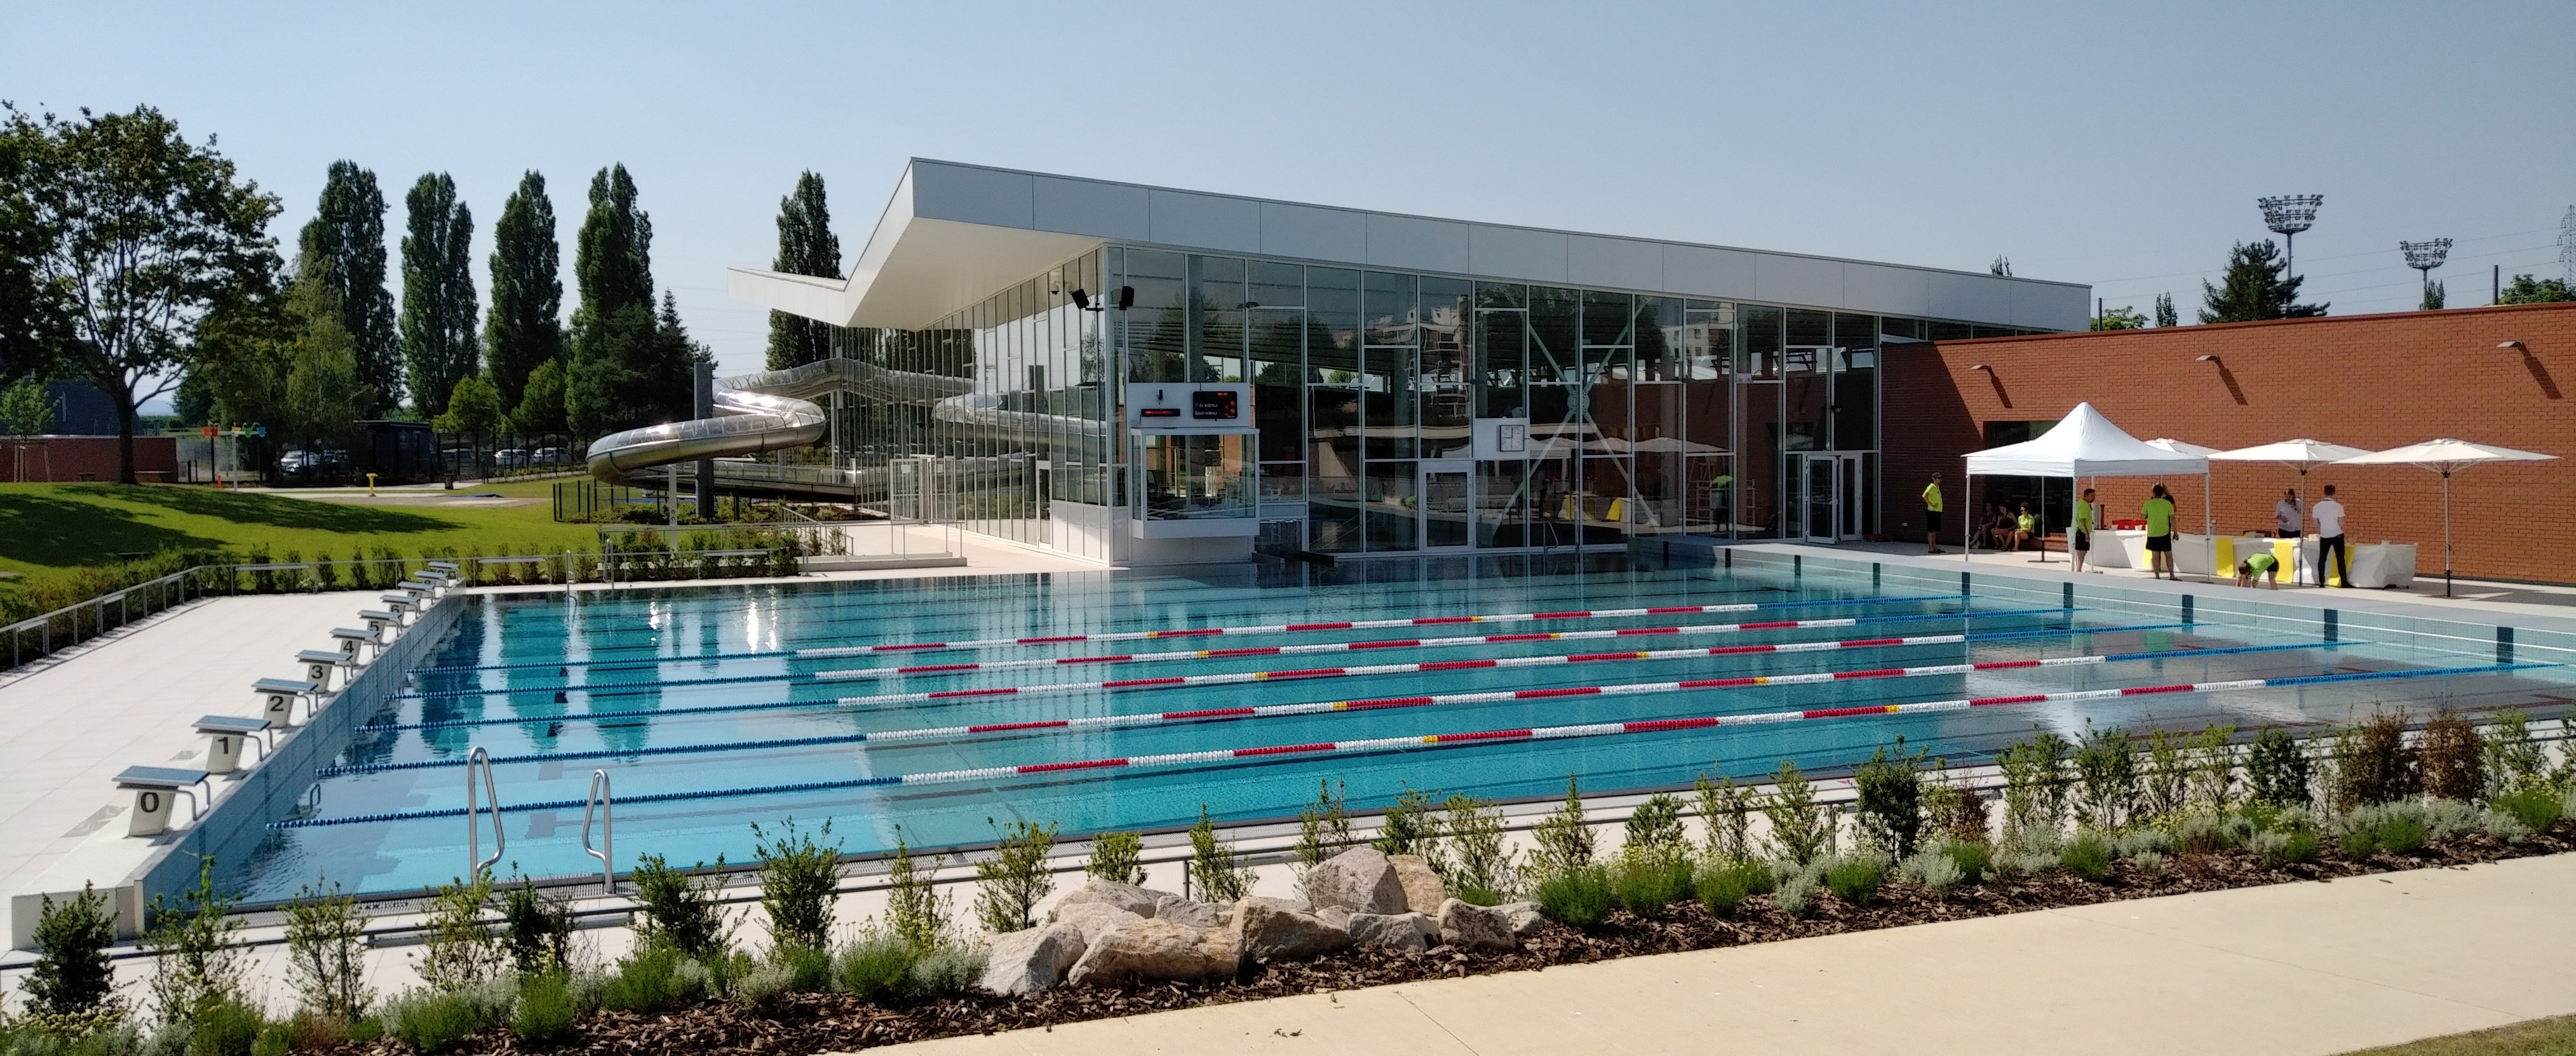 sport piscine hautepierre strasbourg e1564399748262